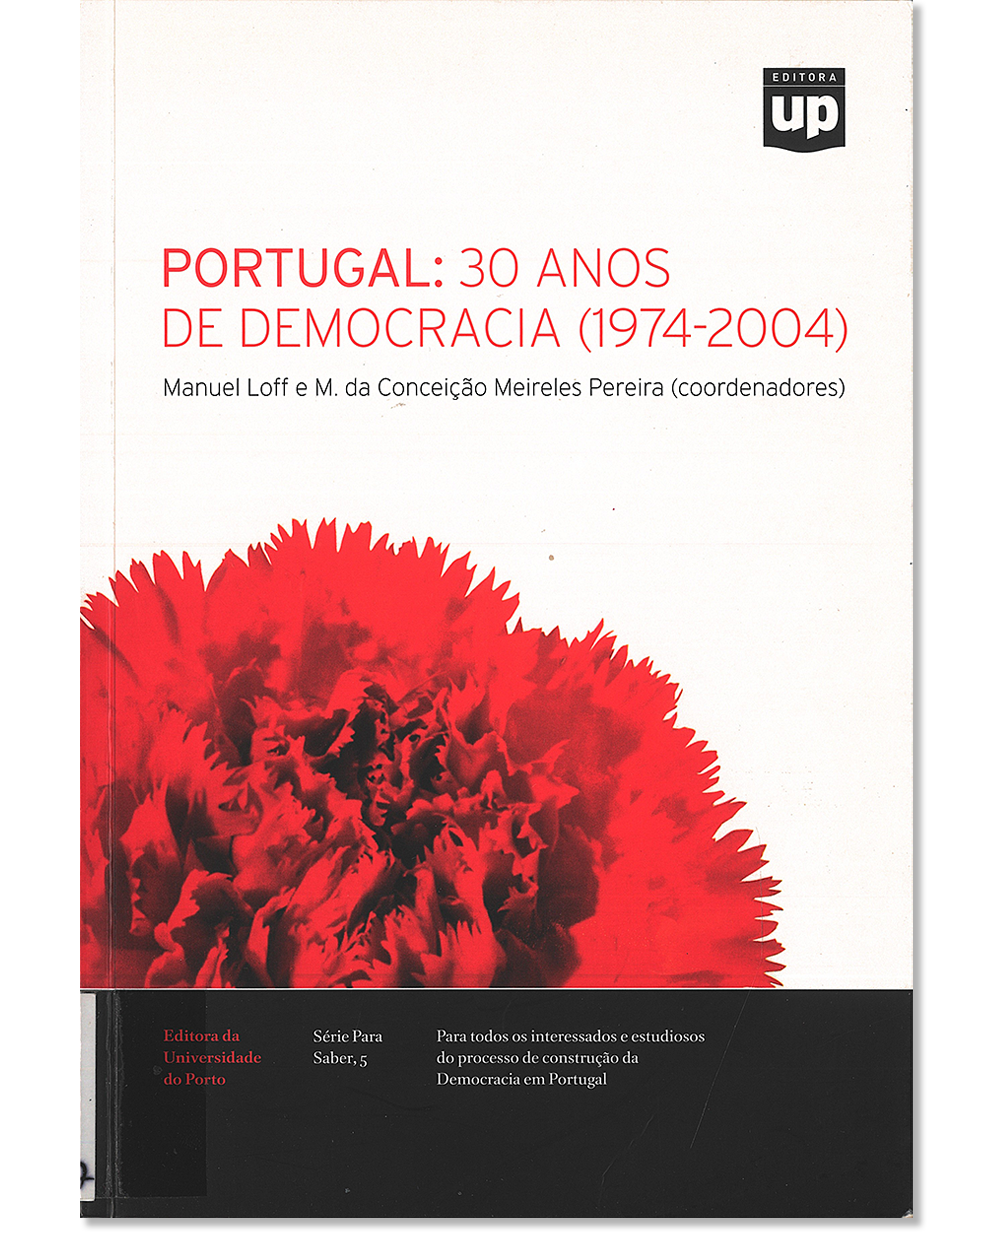 Portugal : 30 anos de democracia (1974-2004)